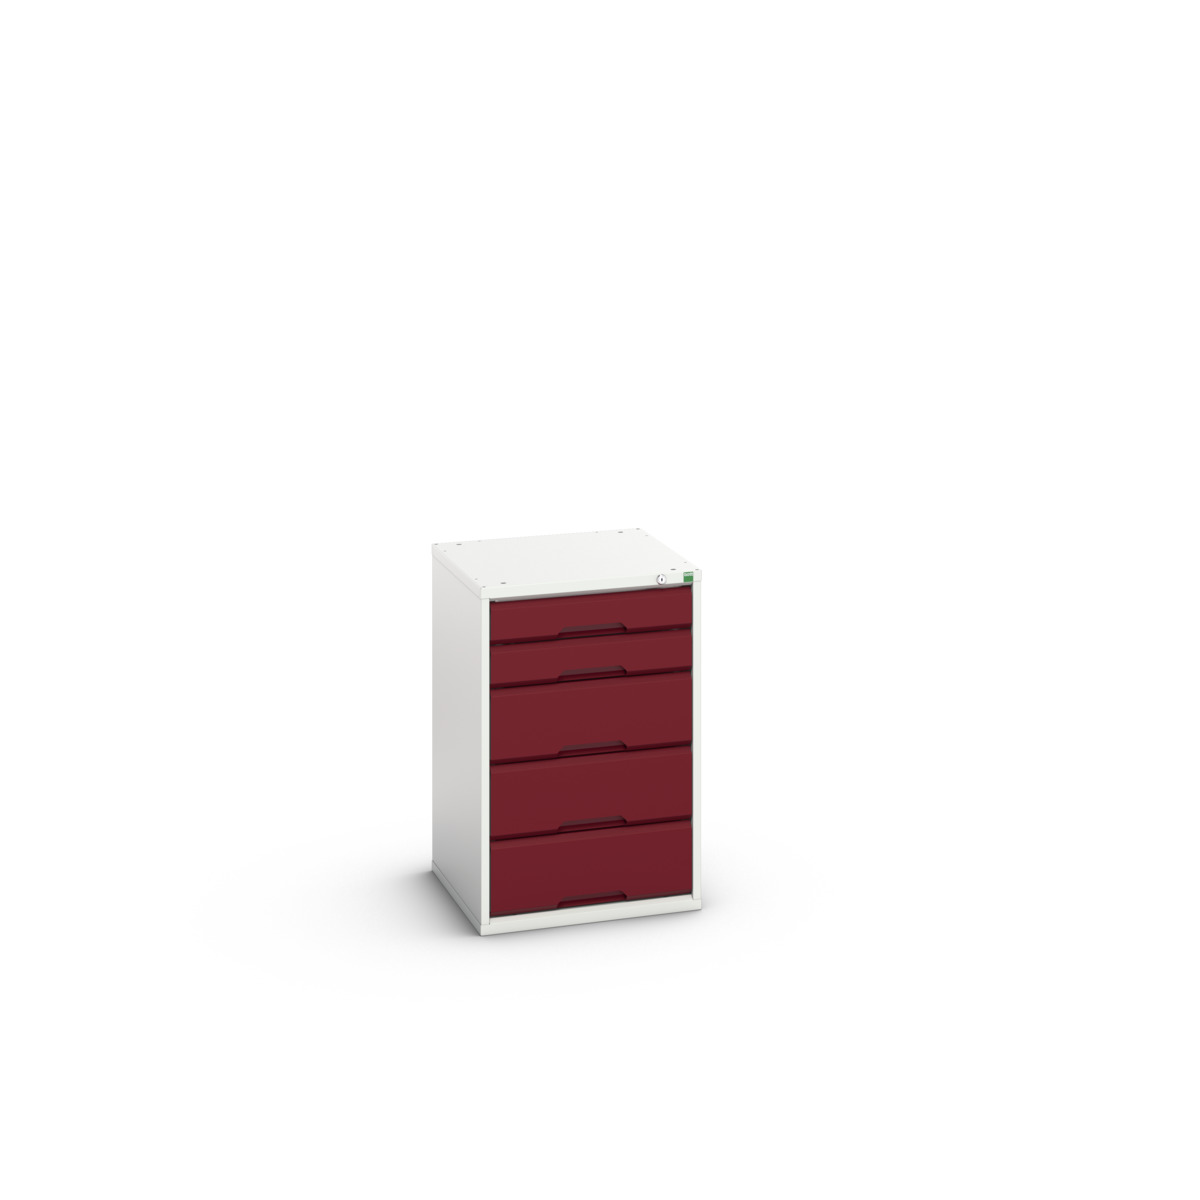 16925012.24 - verso drawer cabinet